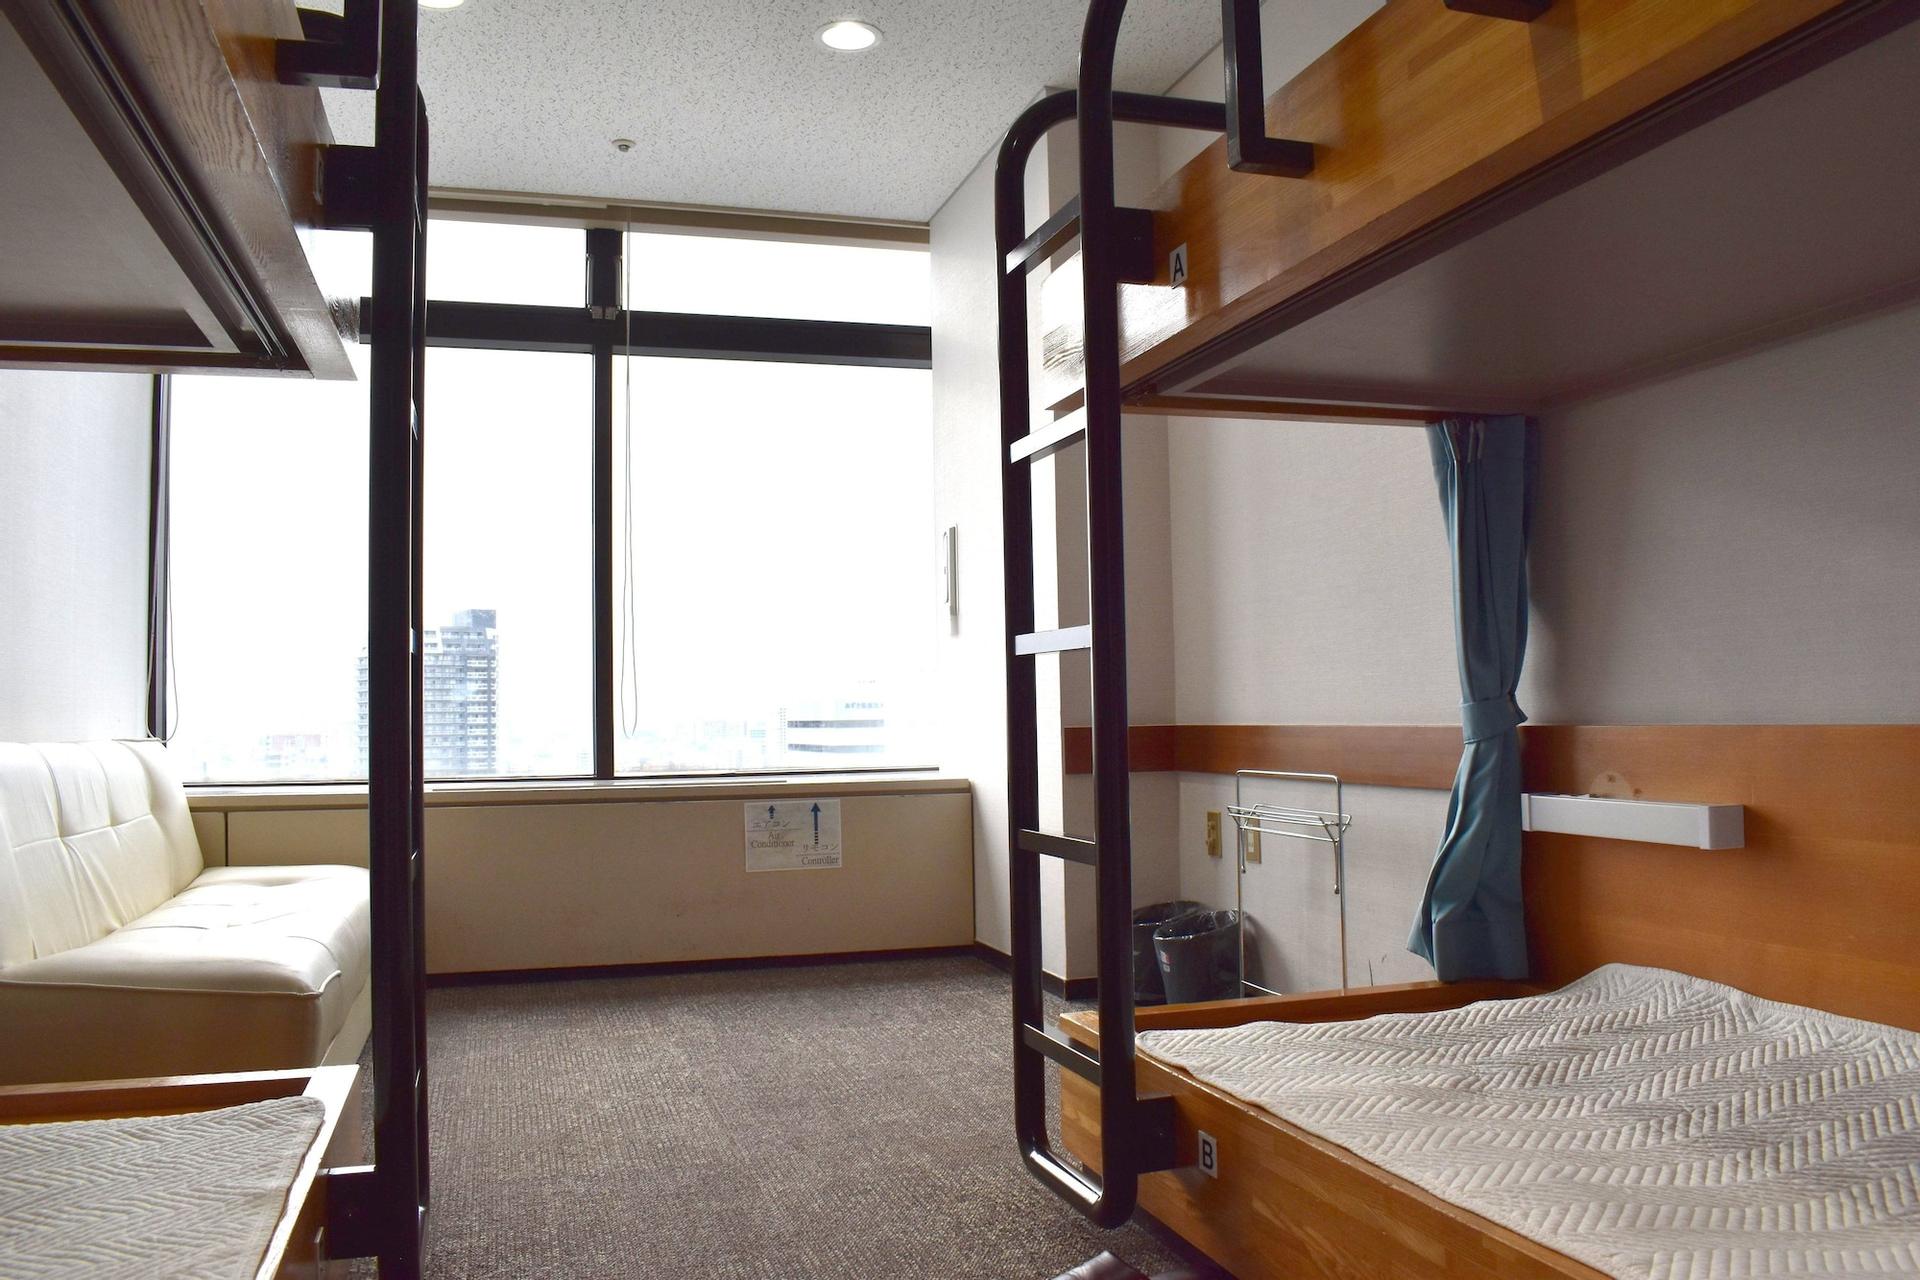 Bedroom 1, Tokyo Central Youth Hostel, Shinjuku